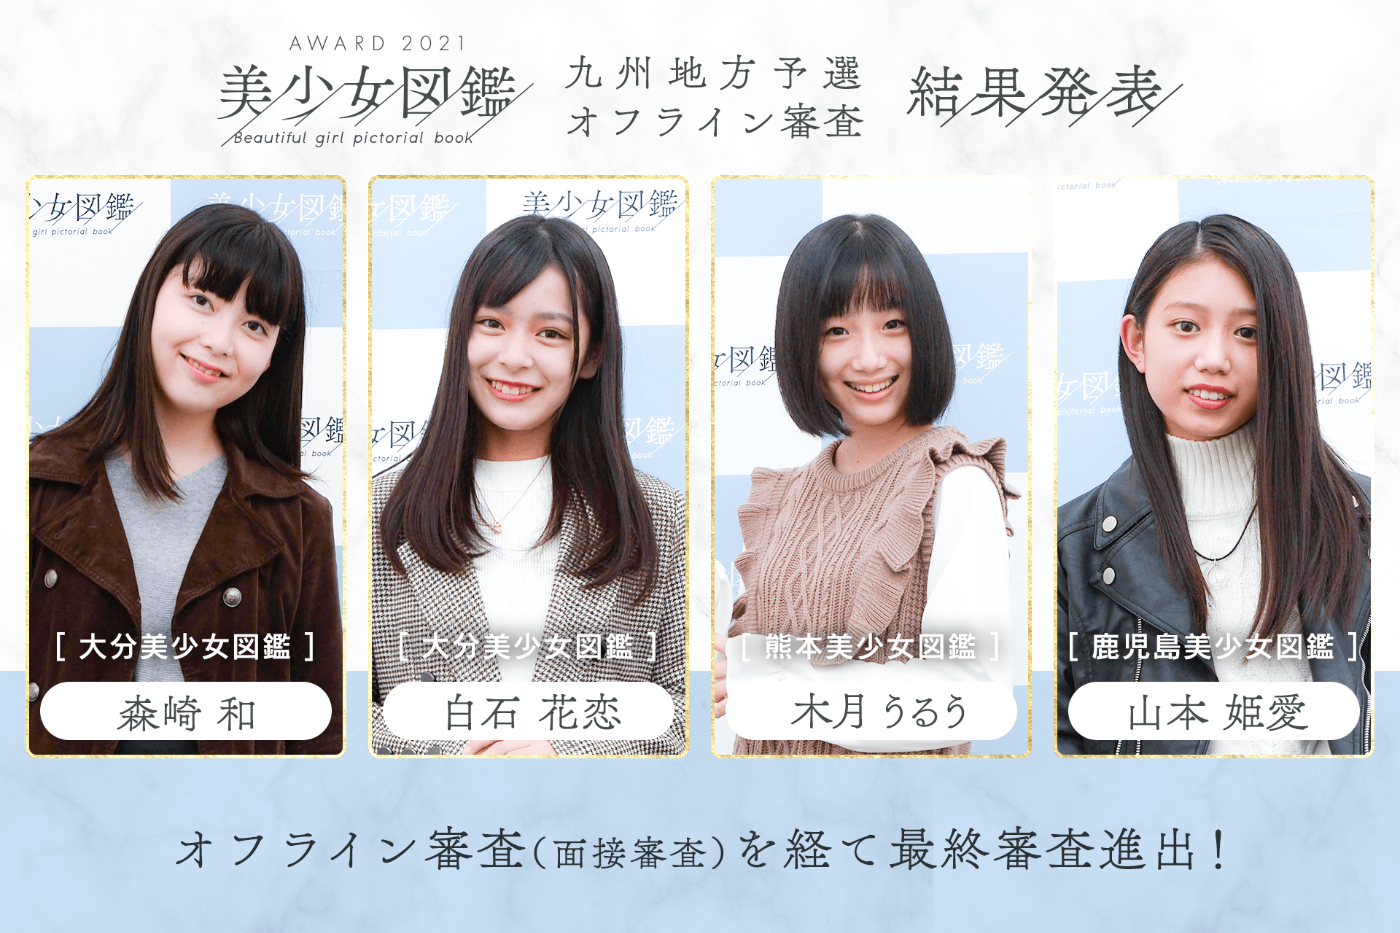 【結果発表】「美少女図鑑AWARD 2021」九州地方予選（オフライン審査）